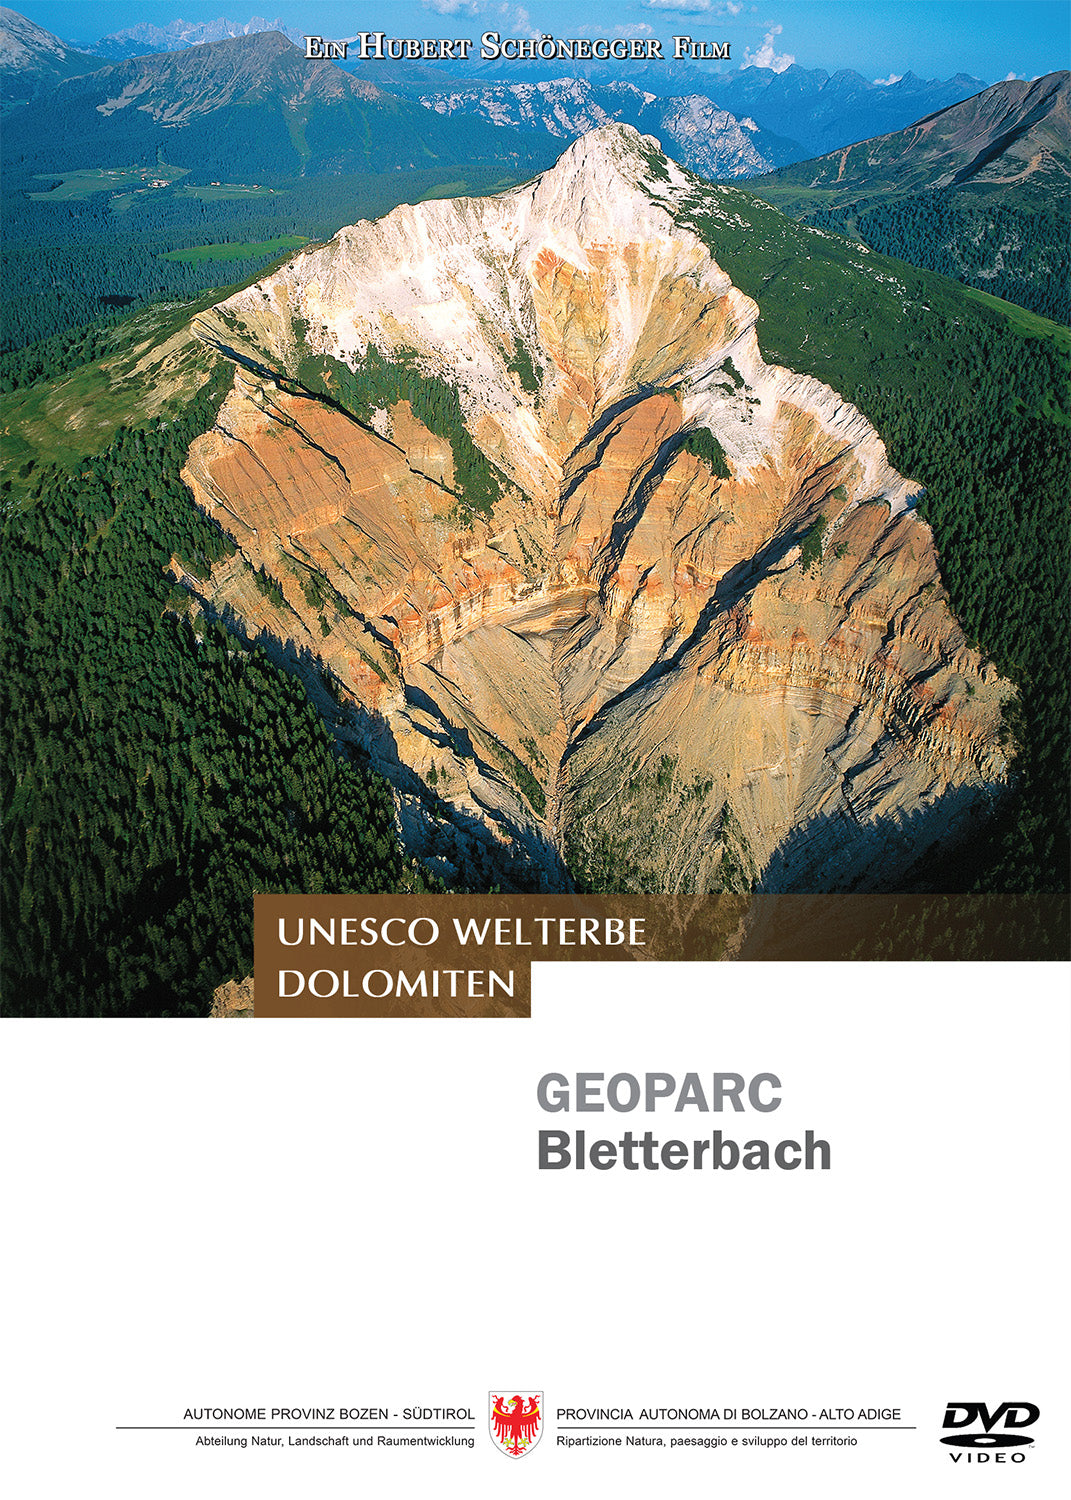 GEOPARC Bletterbach